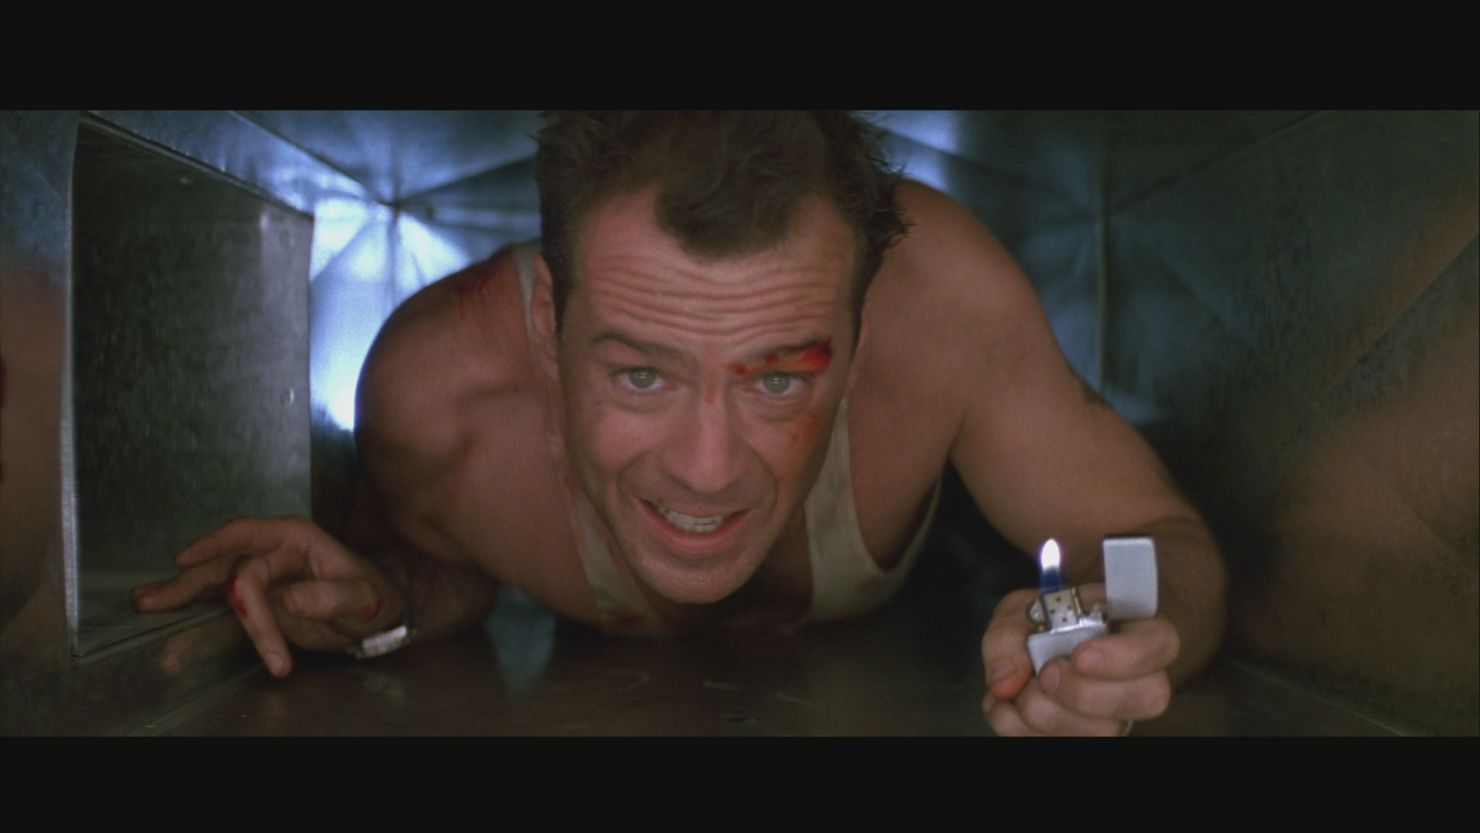 Bruce WIllis began a series when he starred as Officer John McClane in the 1988 film "Die Hard."